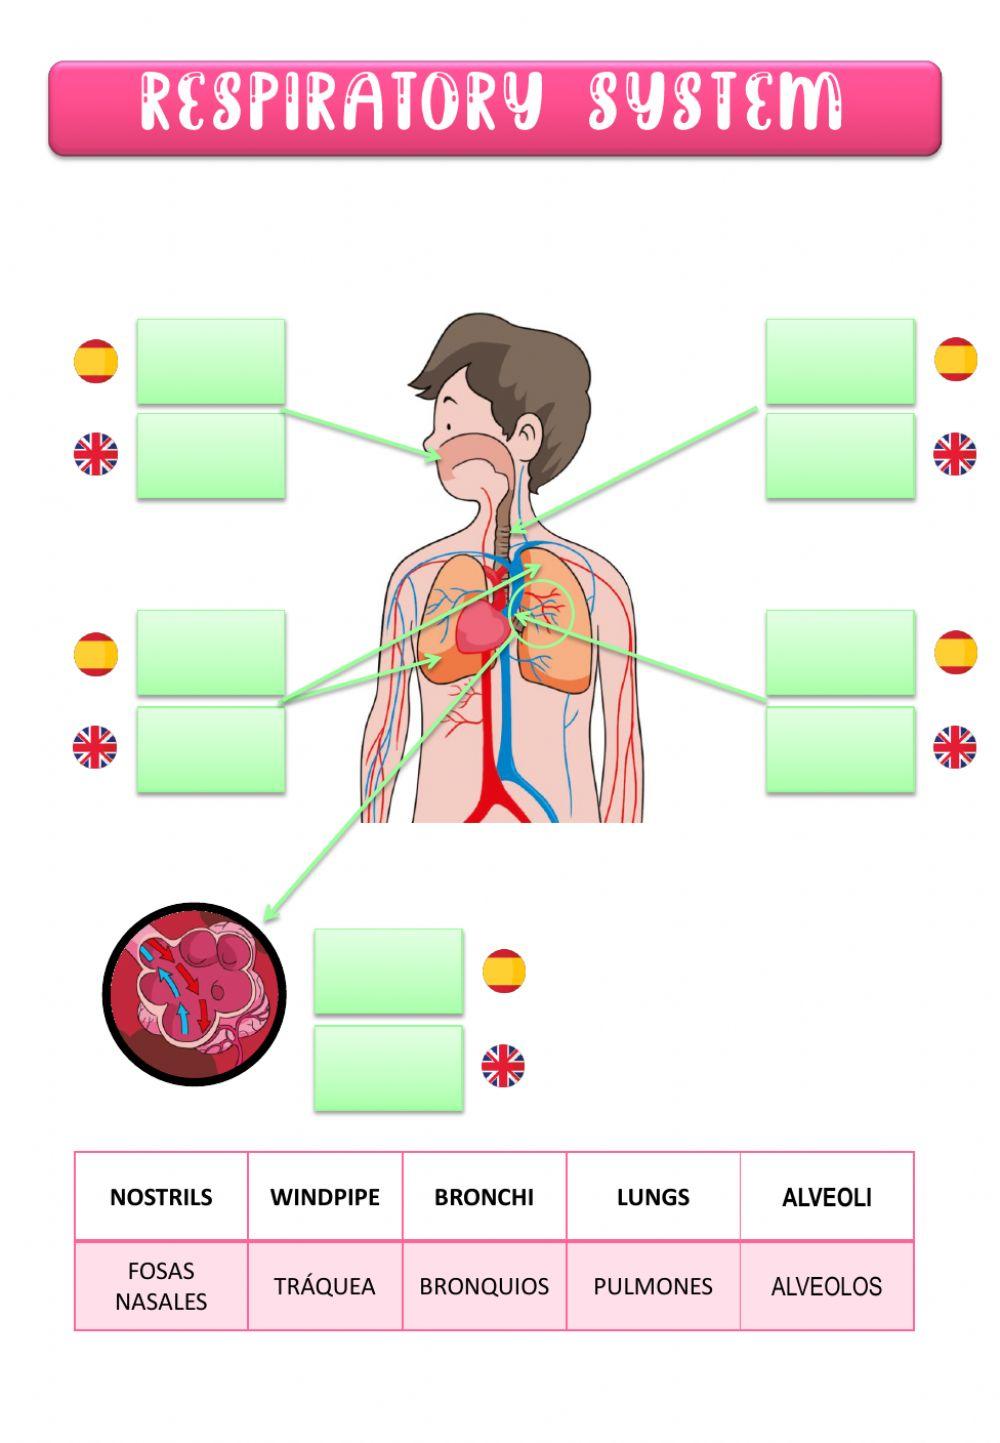 Respiratory system - sistema respiratorio